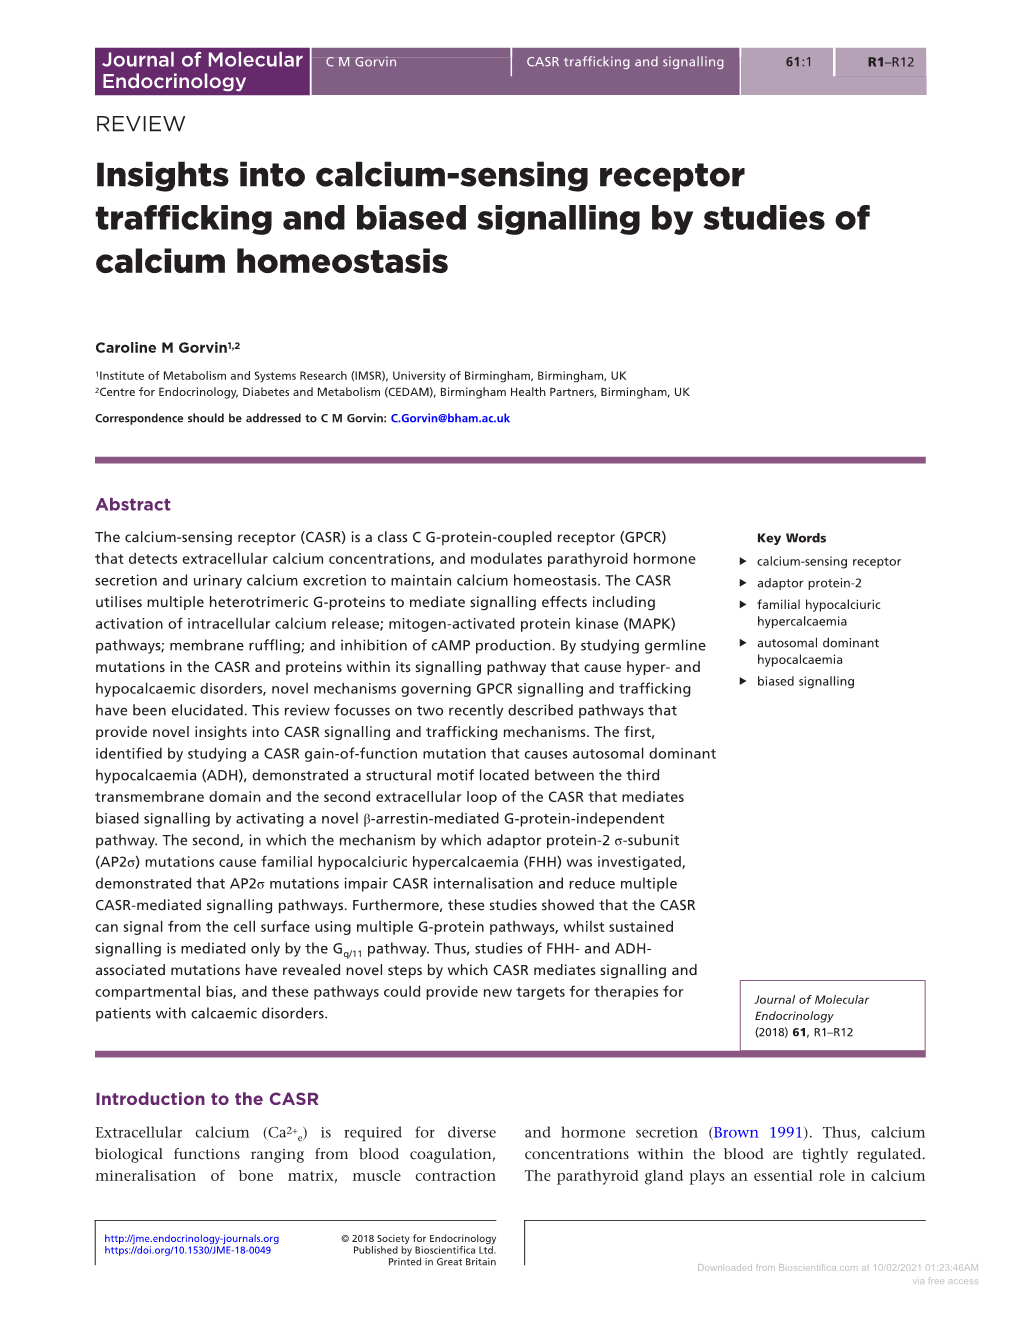 Insights Into Calcium-Sensing Receptor Trafficking and Biased Signalling by Studies of Calcium Homeostasis